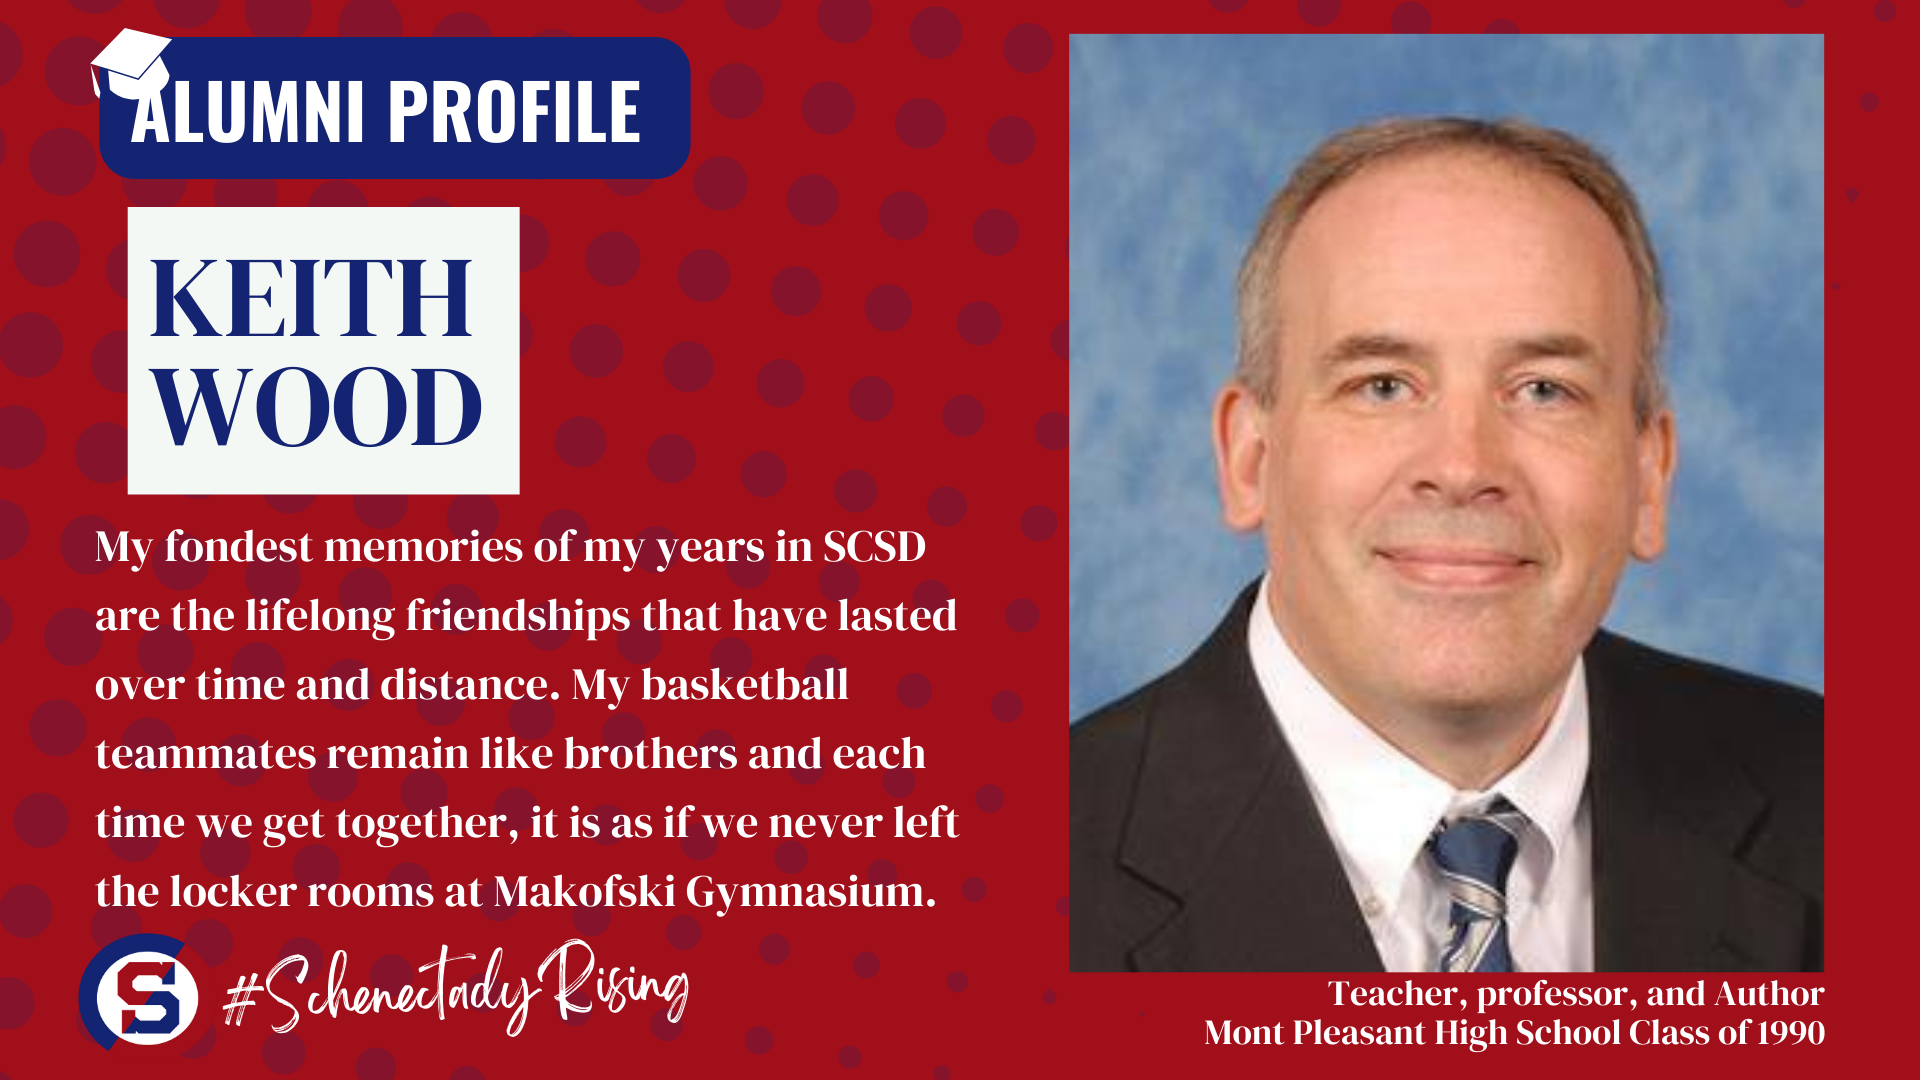 Alumni Profile:  Keith Wood